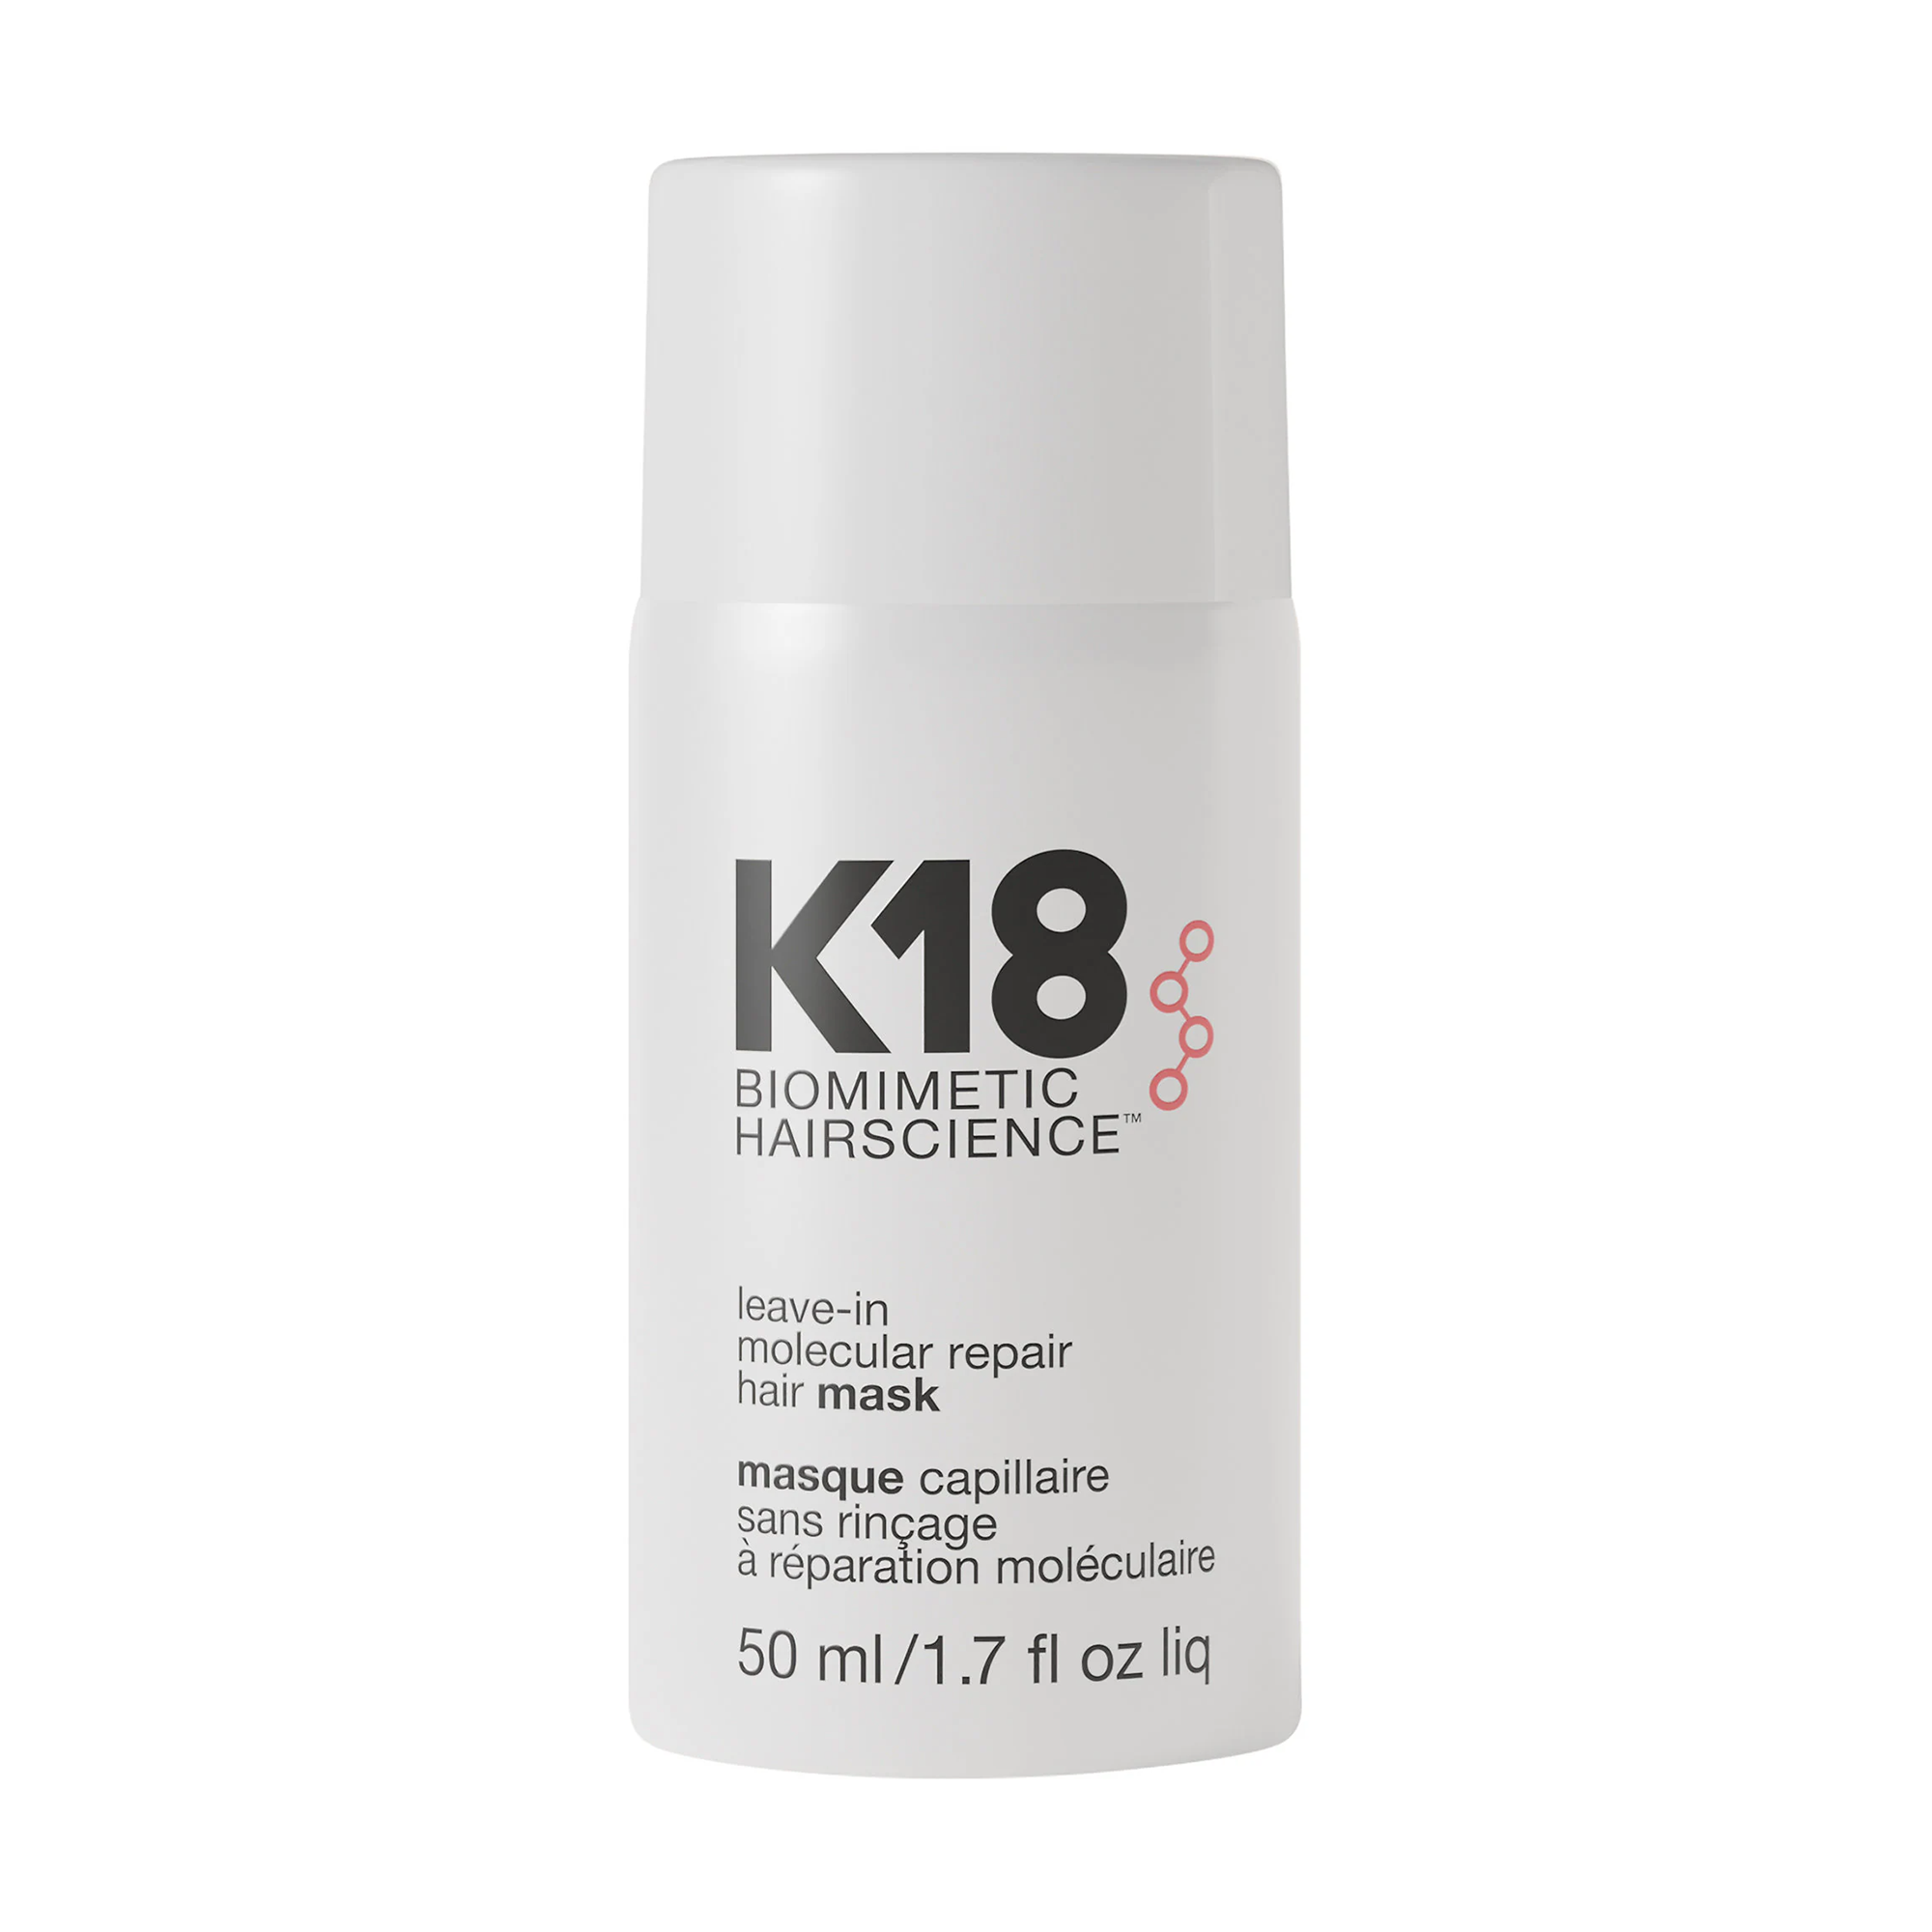 K 18 Leave-In Molecular Repair Hair Mask